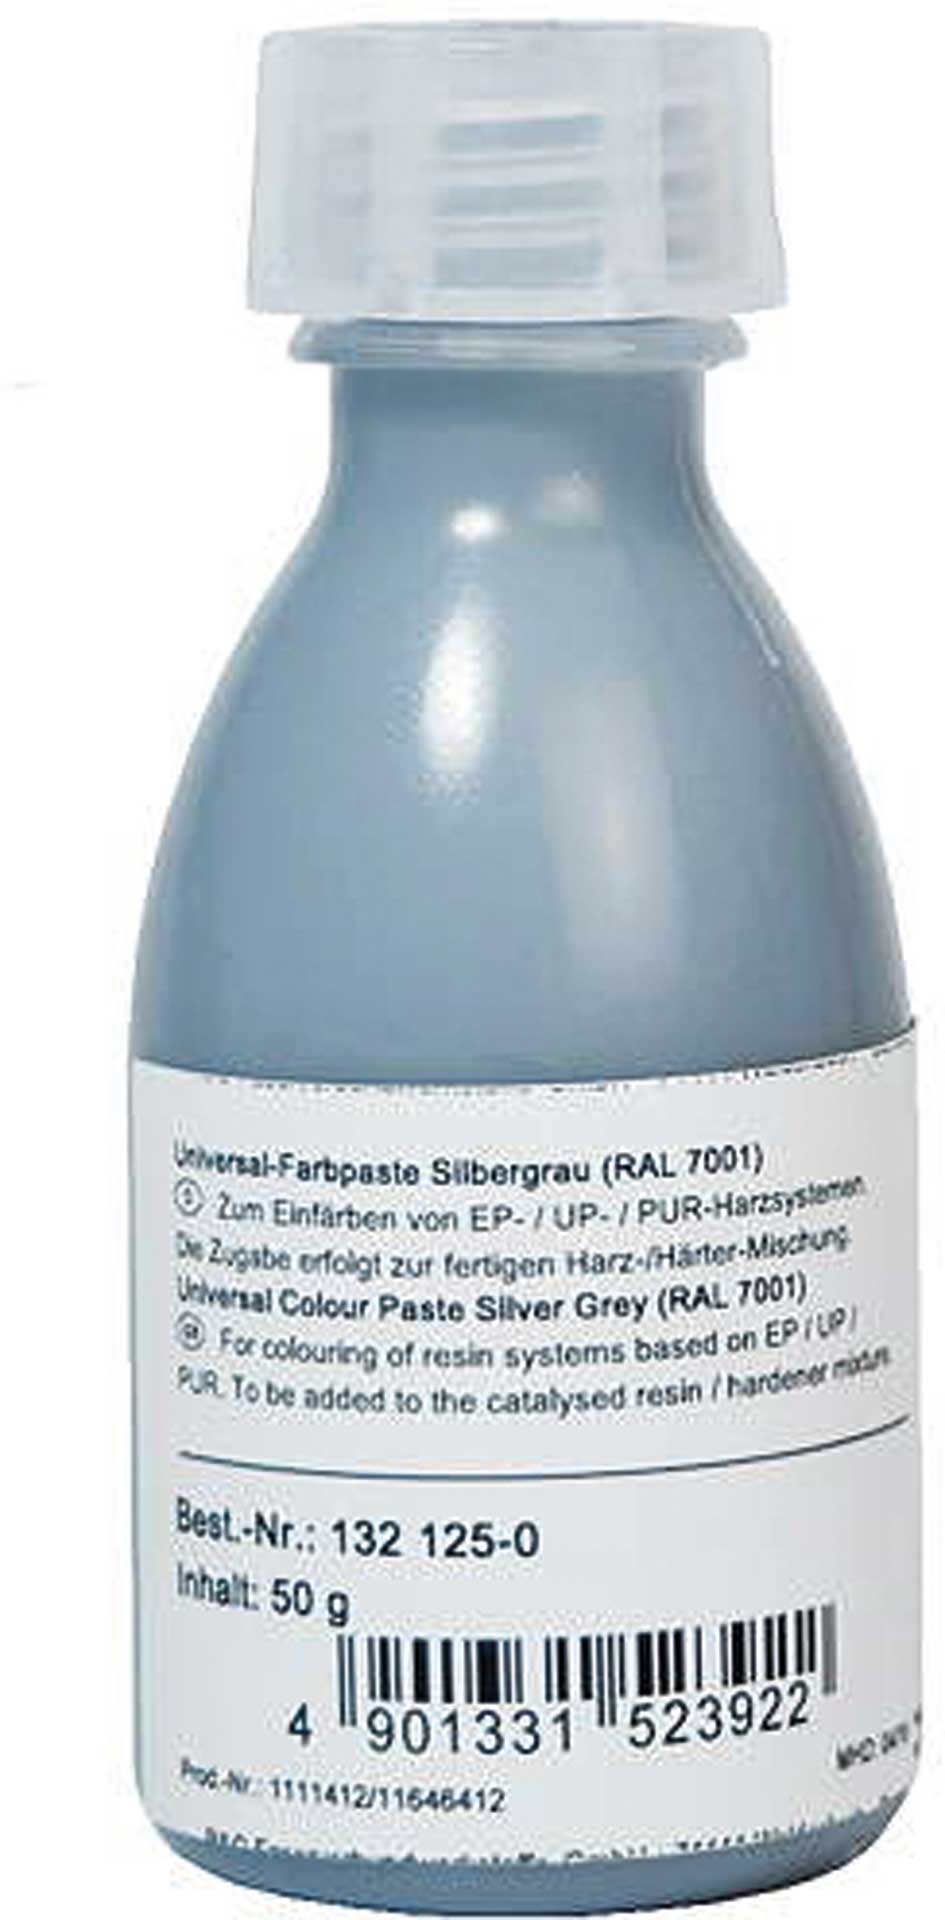 R&G Universal-Farbpaste silbergrau (RAL 7001) Dose/ 250 g